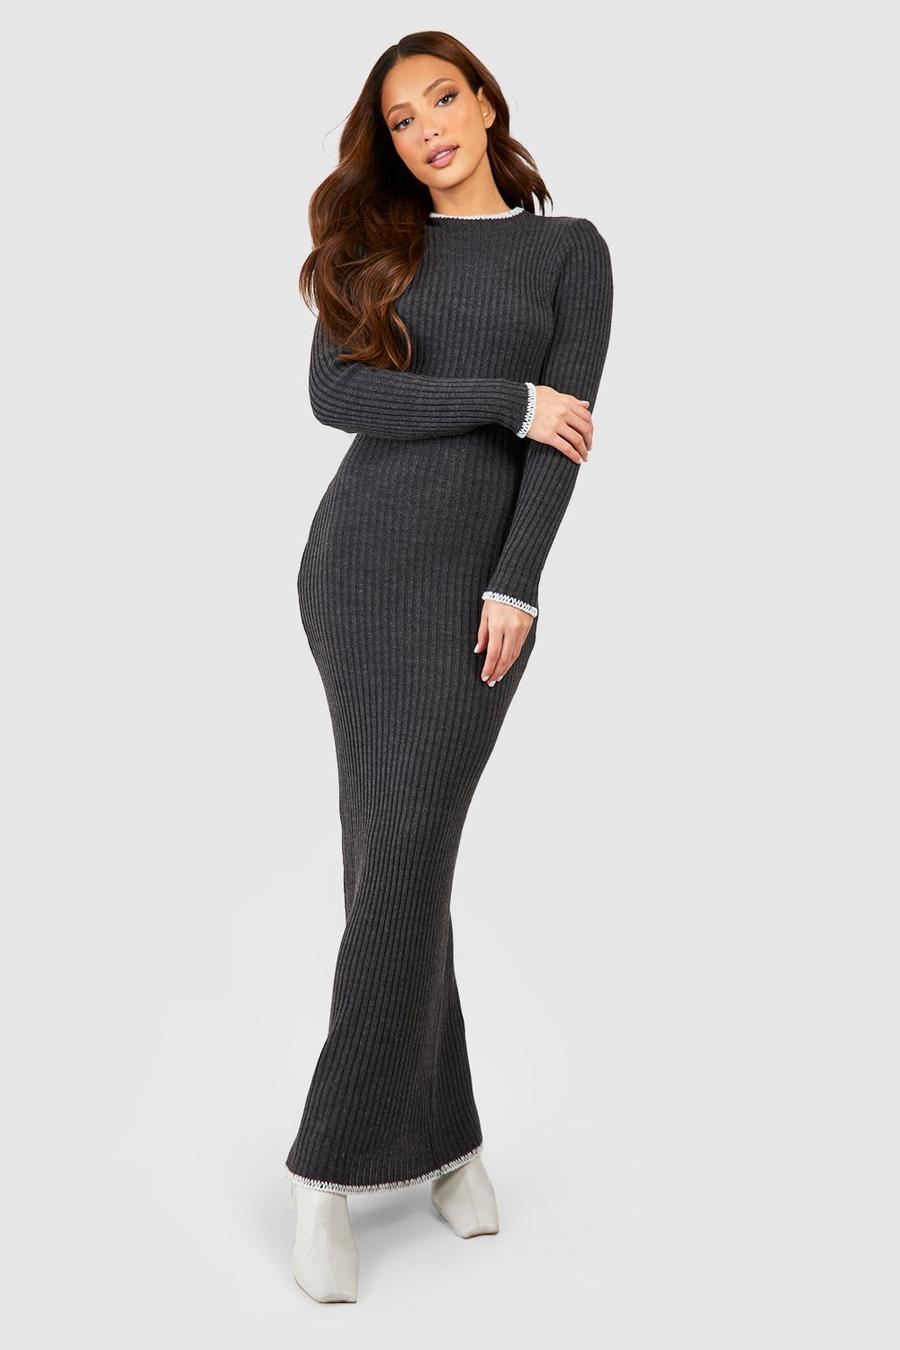 Charcoal grey Tall Contrast Whipstich Rib Knit Maxi Dress